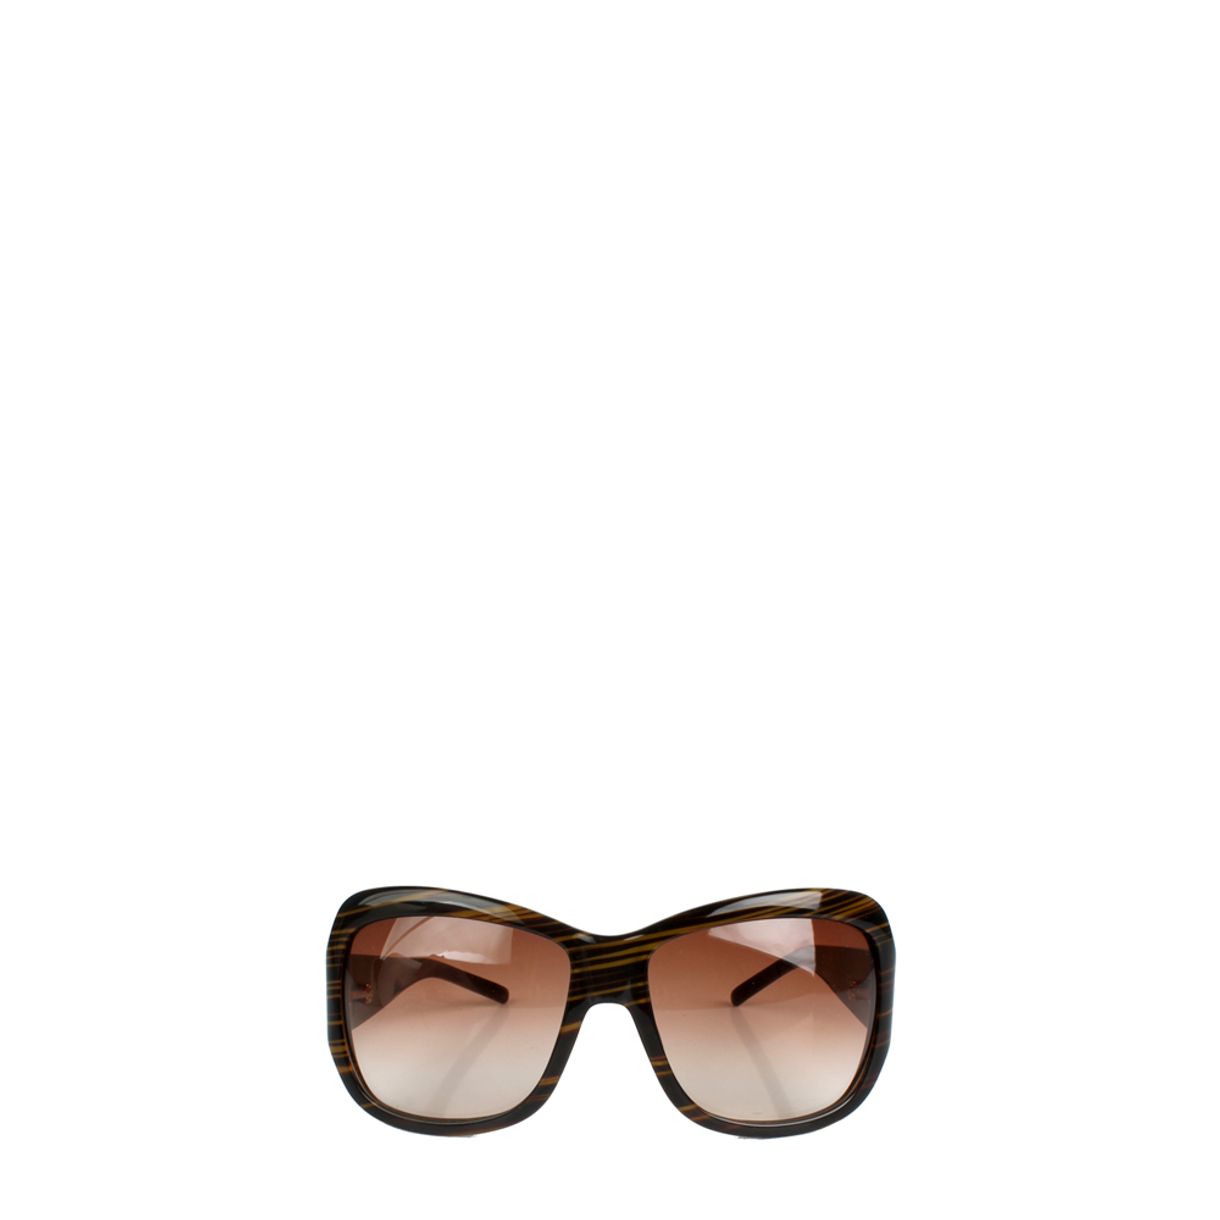 Oculos-Marc-By-Marc-Jacobs-Acrilico-Marrom